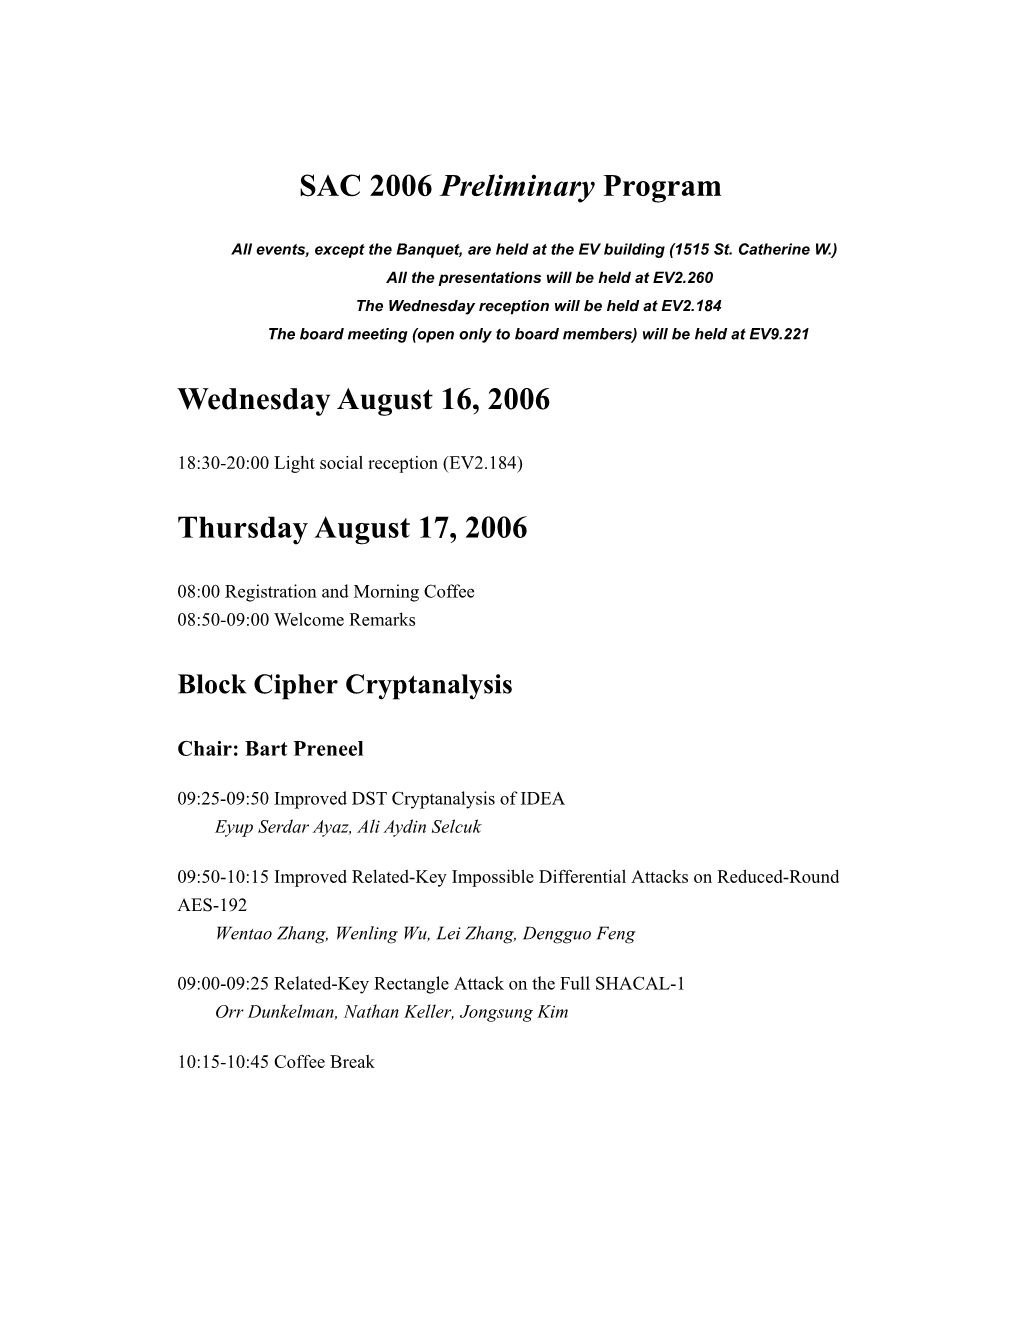 SAC 2006 Preliminary Program Wednesday August 16, 2006